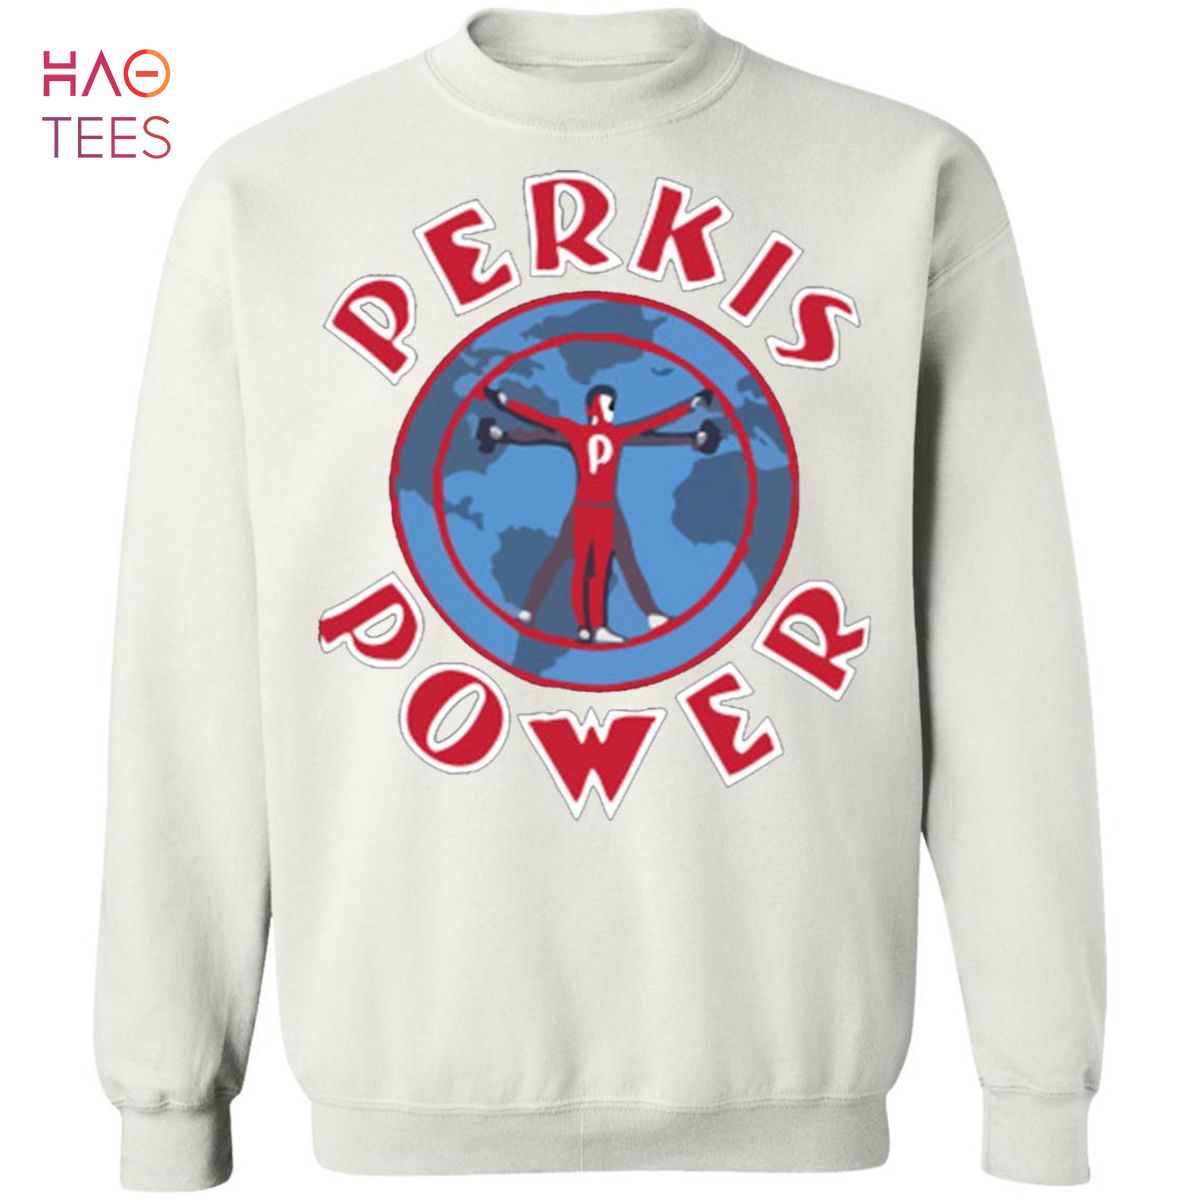 [NEW] Perkis Power Sweater